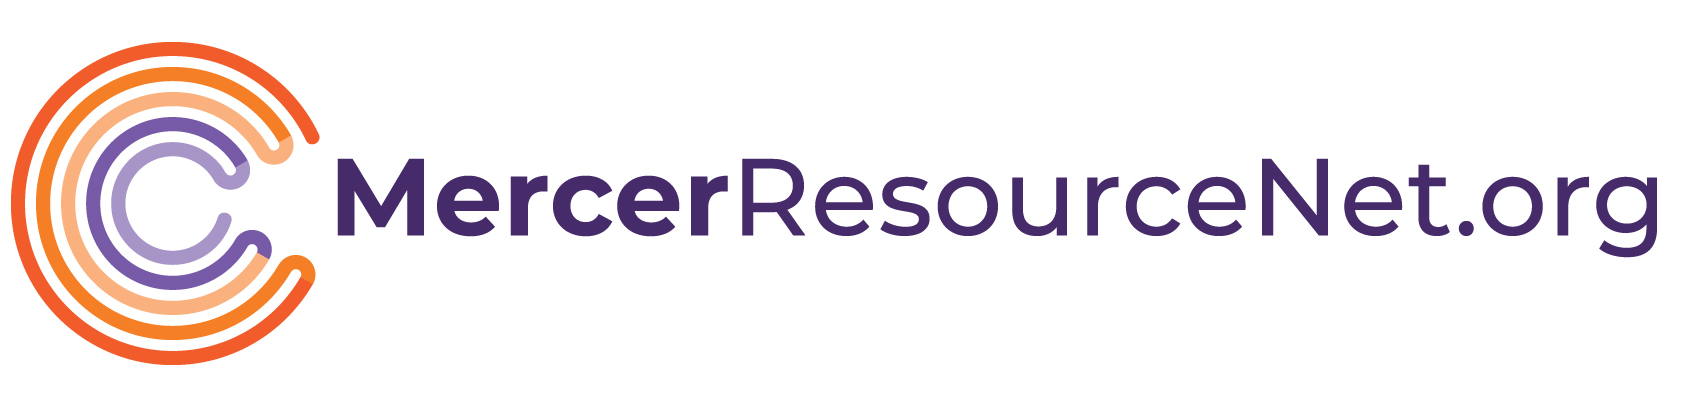 Mercer ResourceNet